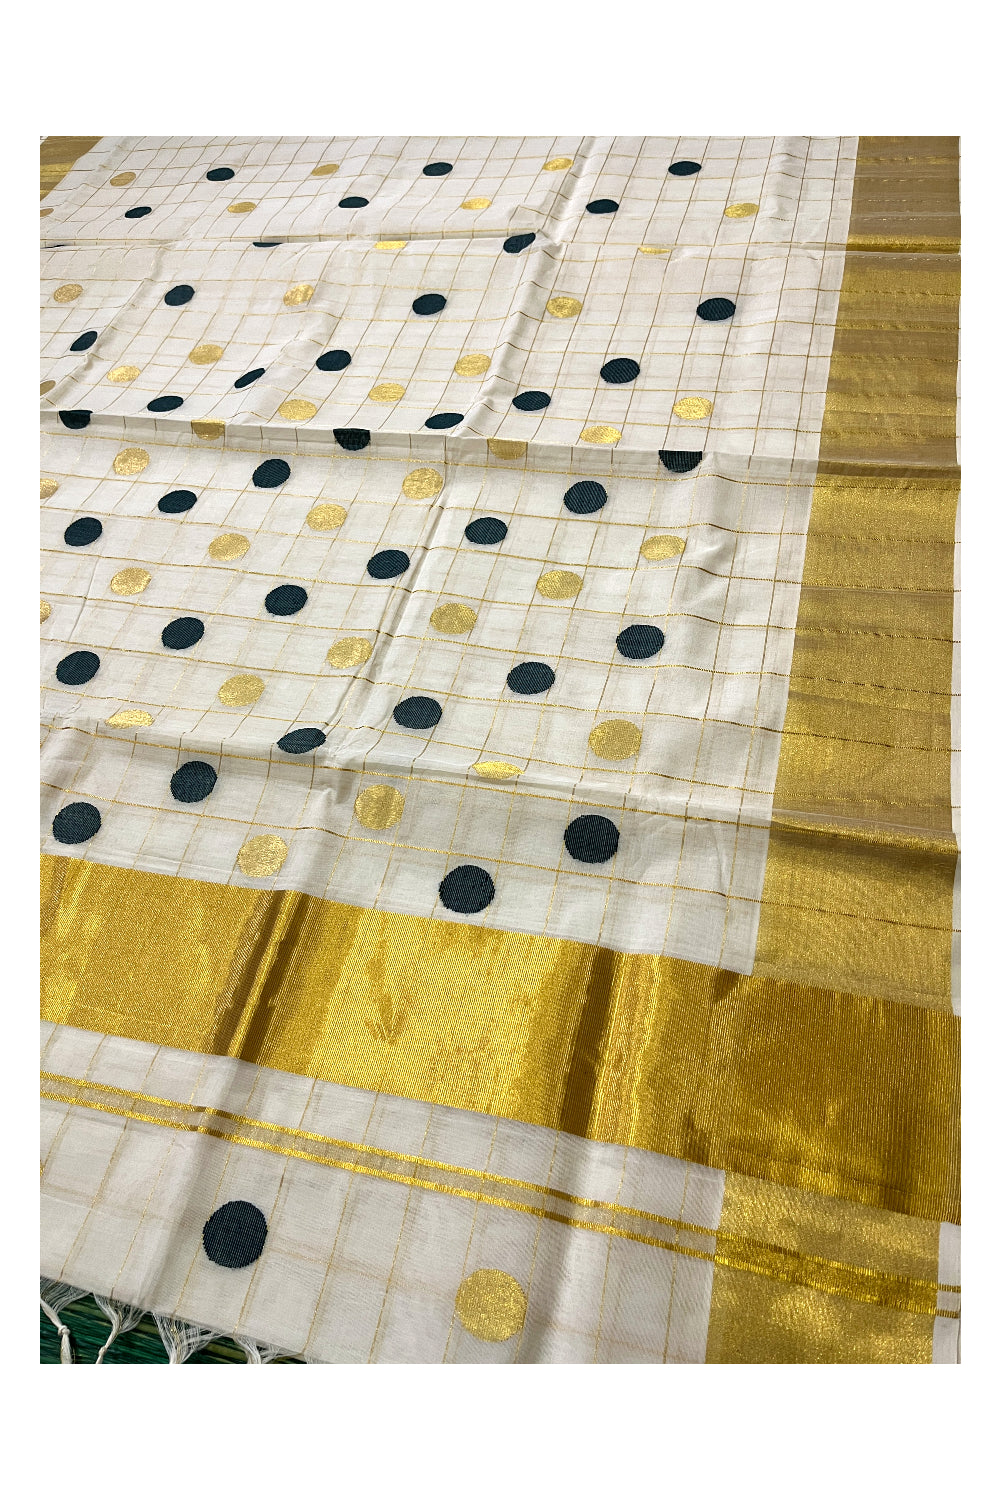 Southloom Premium Handloom Cotton Check Design Saree with Golden and Green Polka Work Across Body